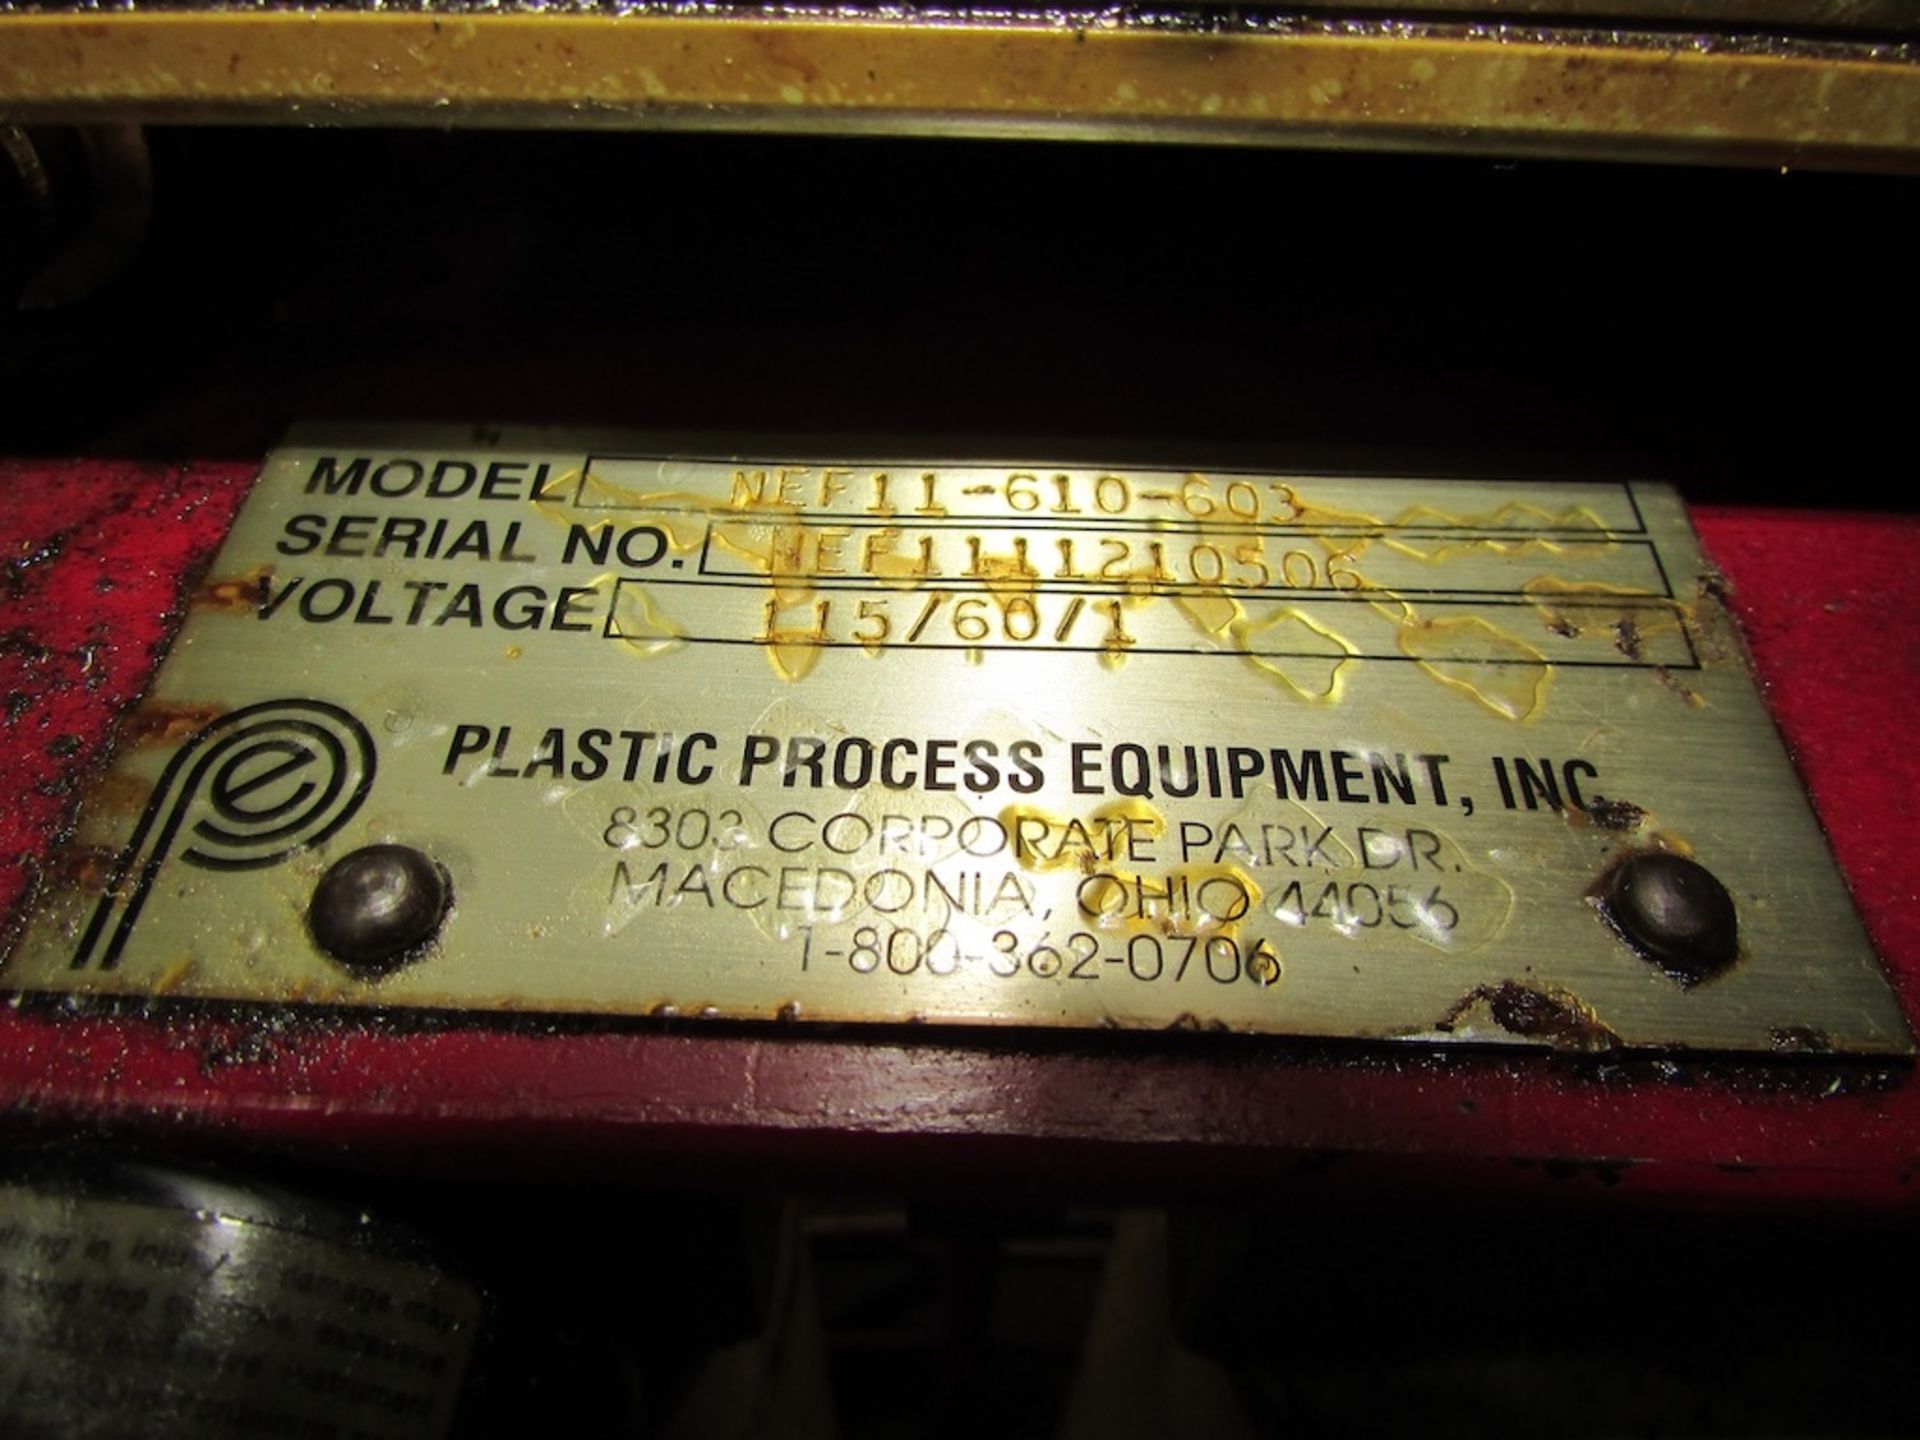 Plastic Process Equipment Model NEF11-610-603 3/4 HP Filter Cart - Bild 6 aus 6